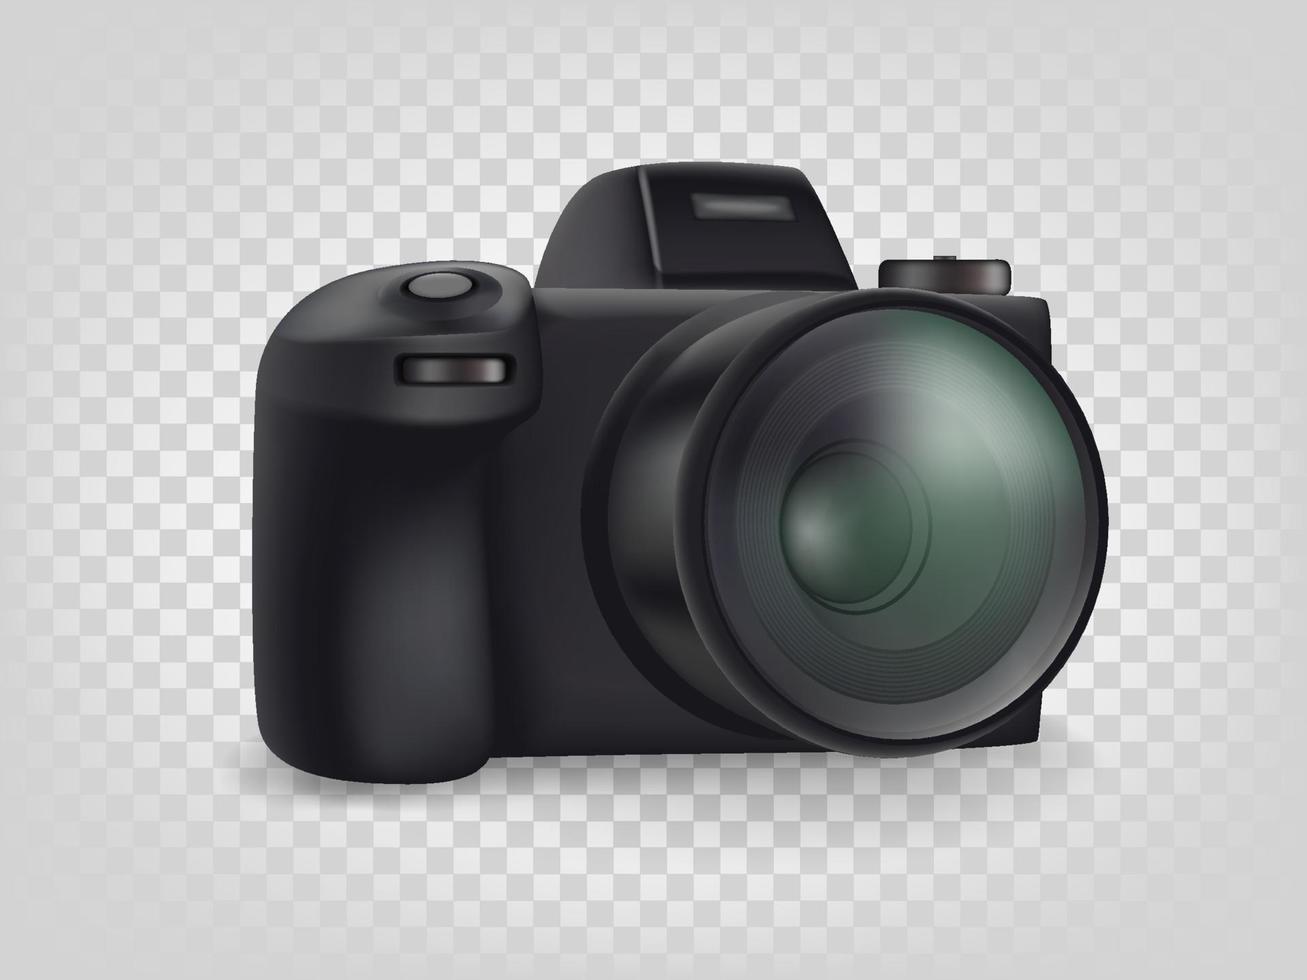 fotocamera digitale mirrorless moderna nera isolata vettore